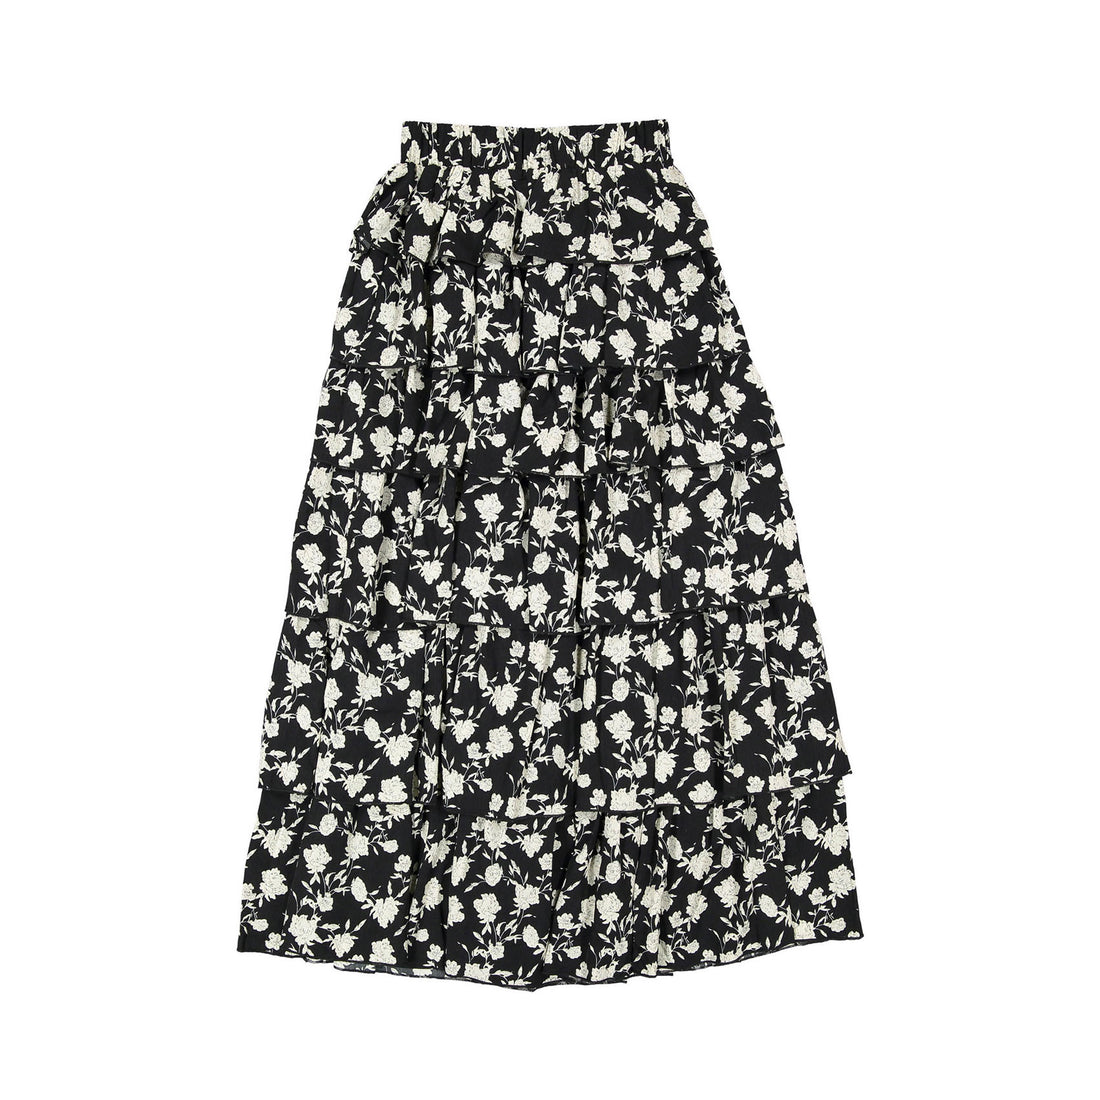 A4 Floral Print Layered Maxi Skirt